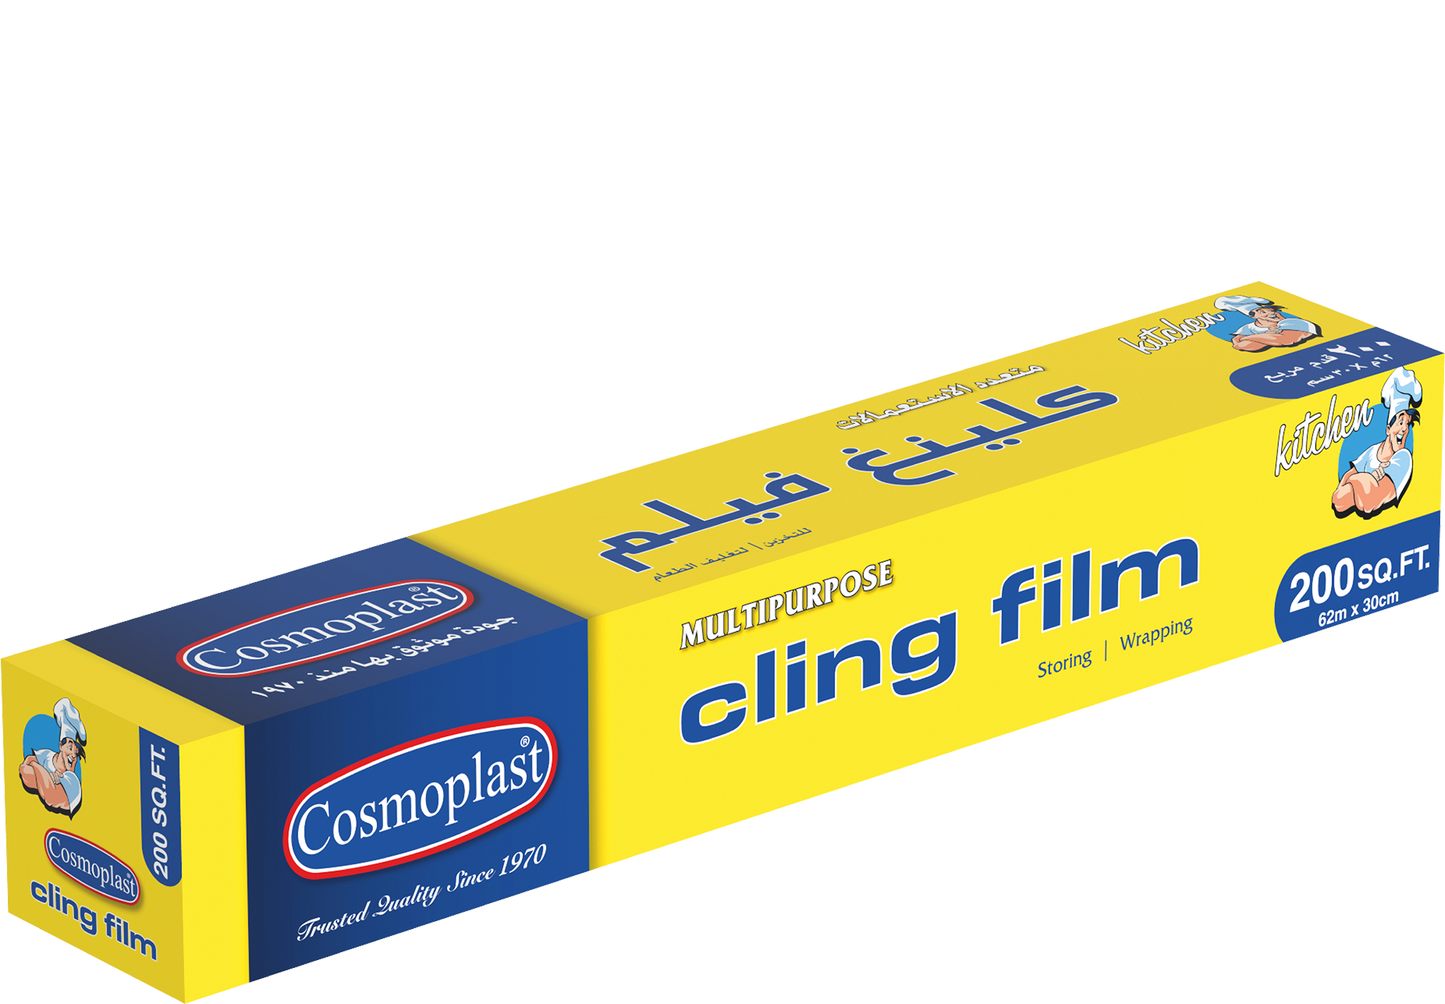 Cling Film 30 cm - 200 Sq. Ft.